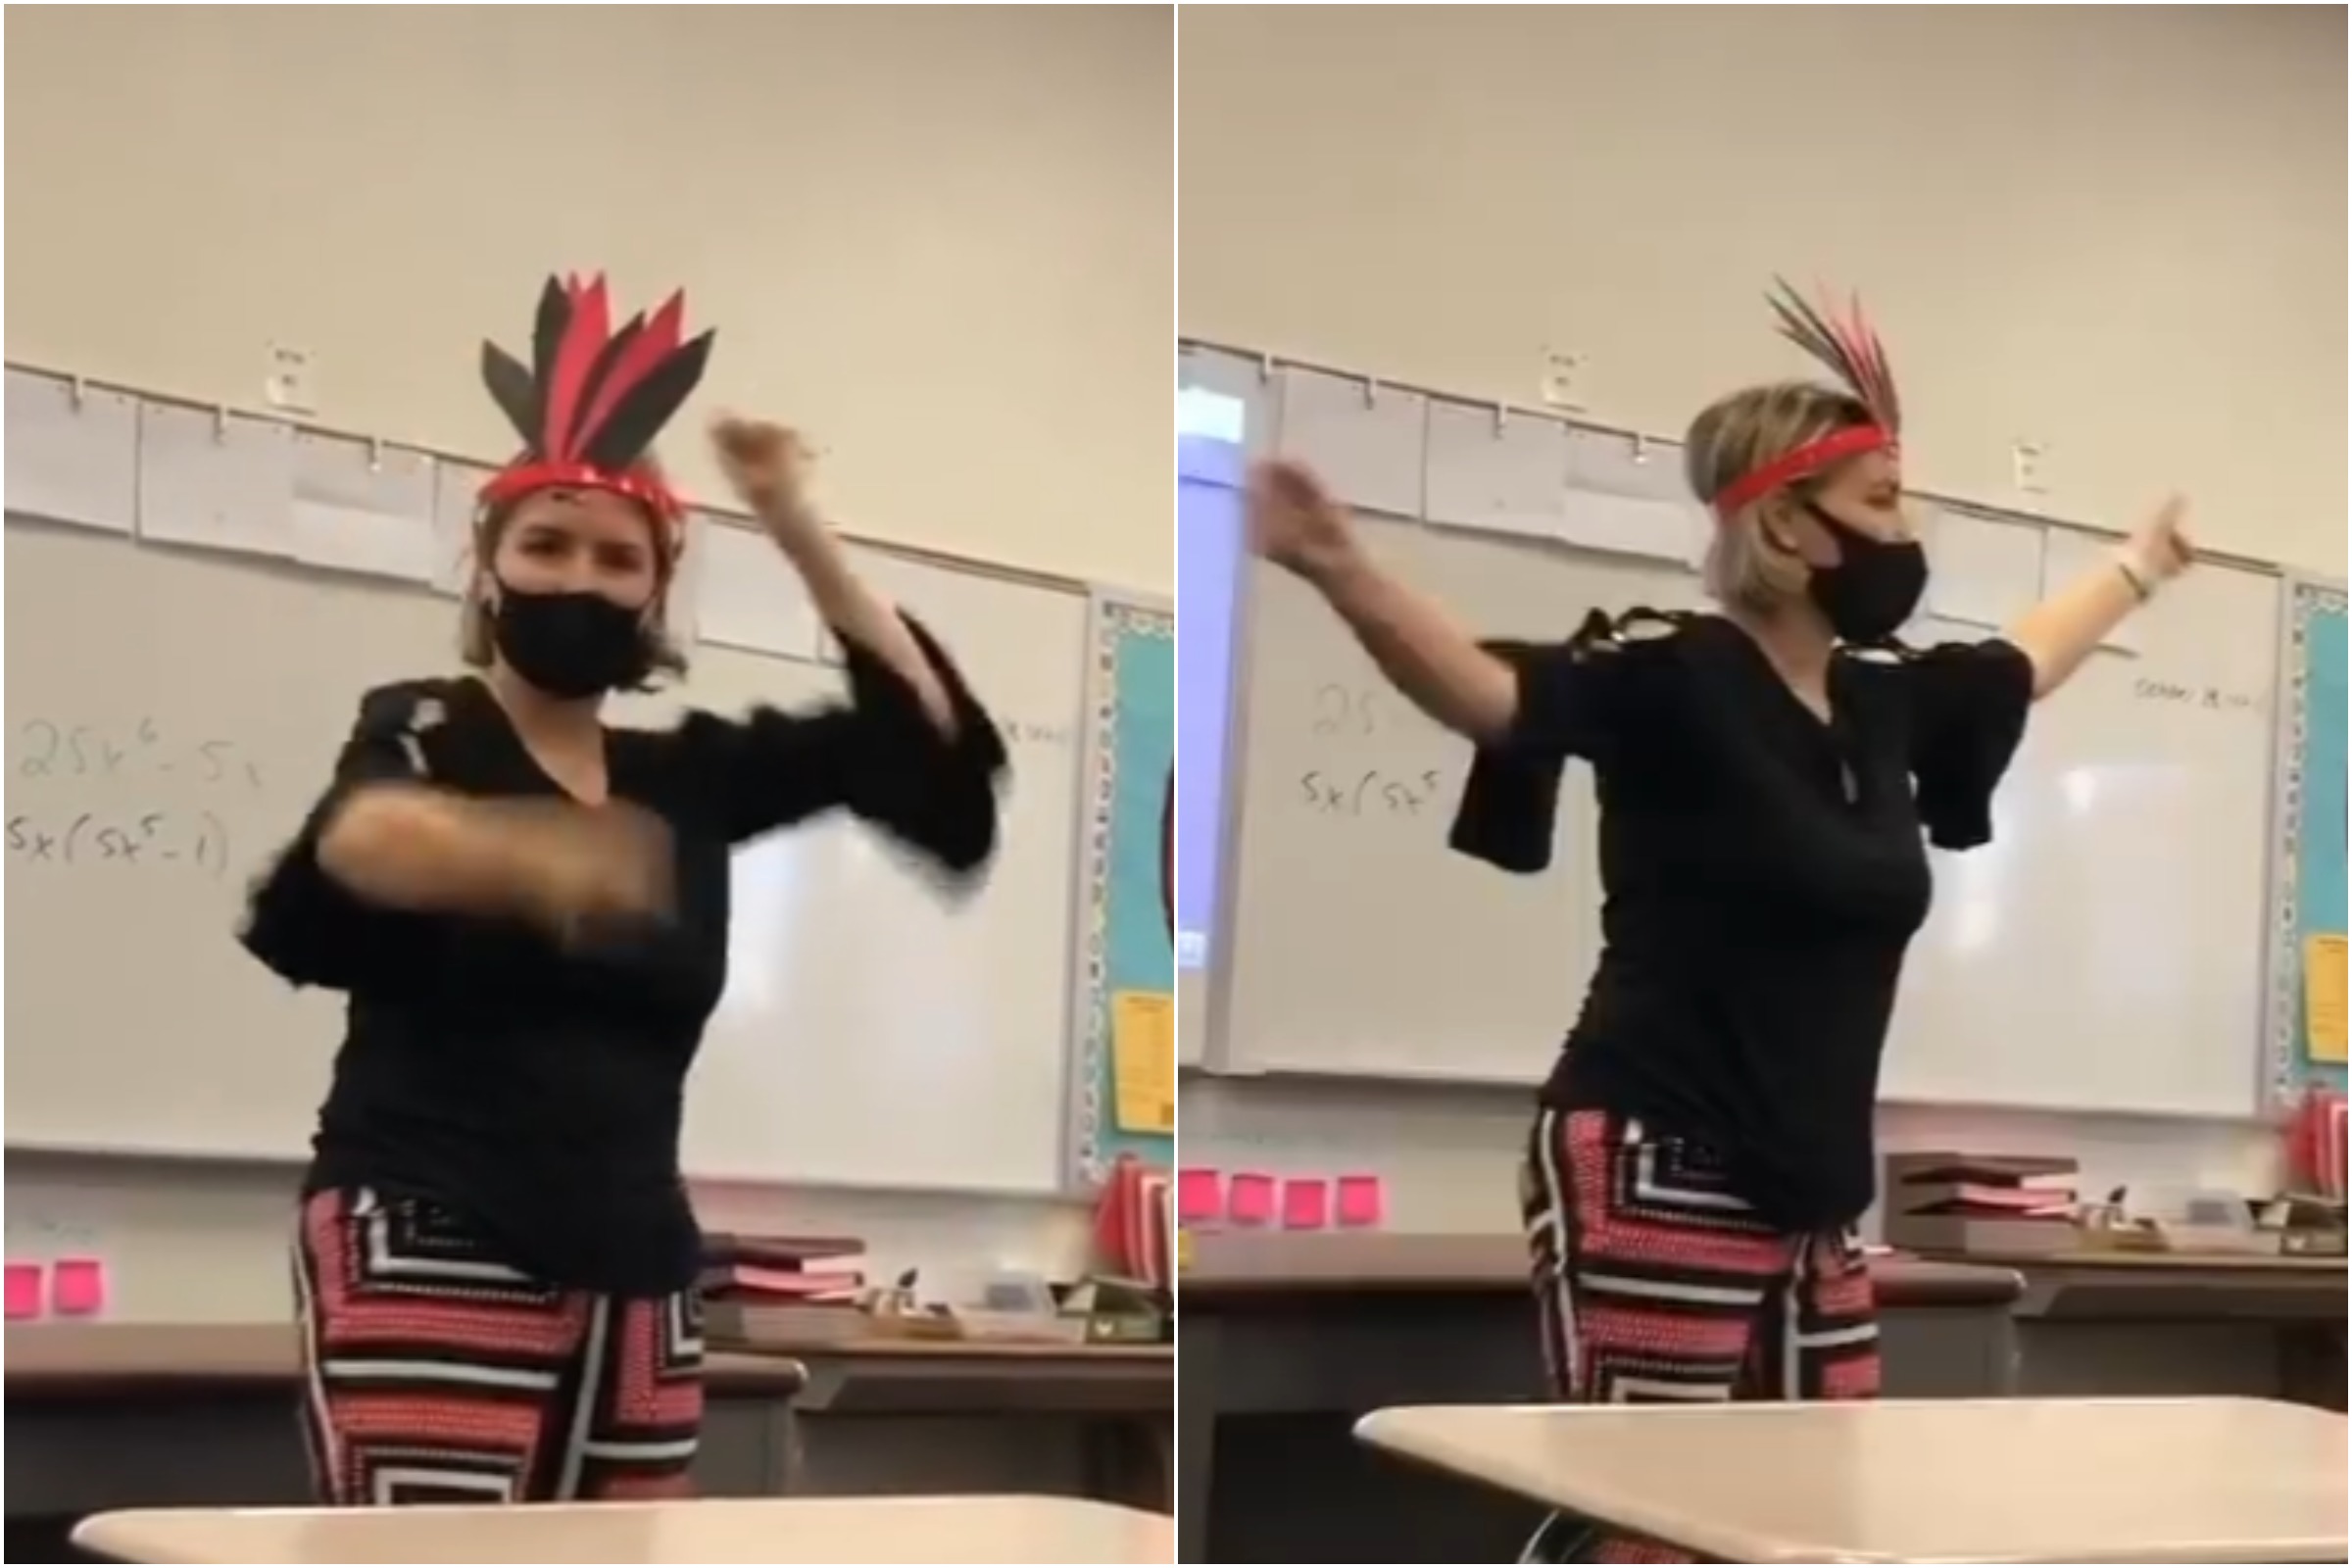 Teacher calls on fans to wear Indigenous athletes' jerseys on Friday